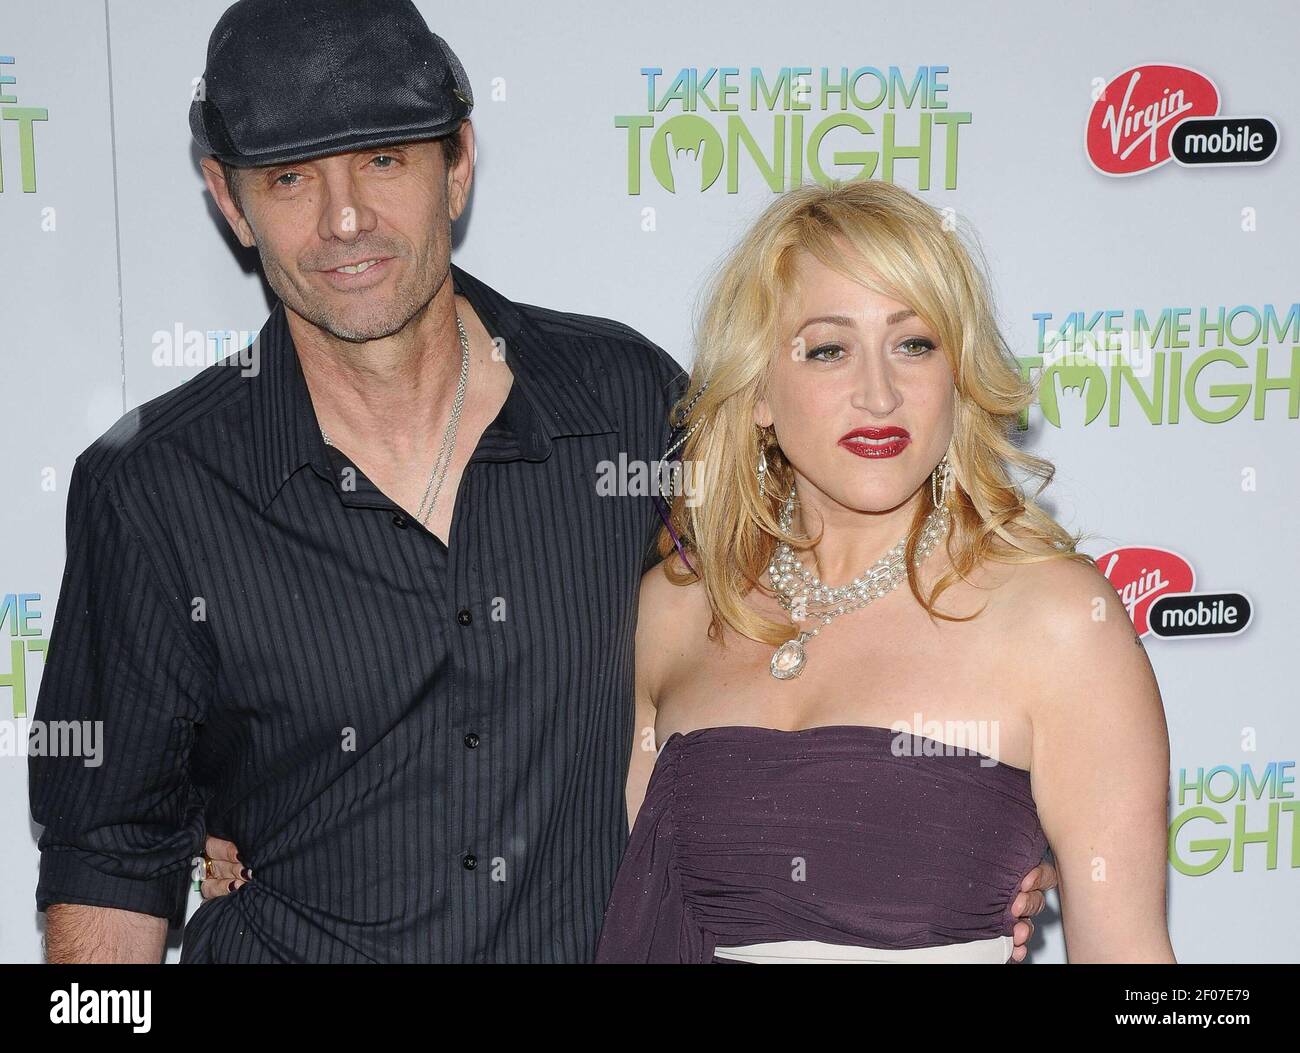 Michael Biehn And His Wife Jennifer Blanc Take Me Home Tonight Premiere Held At Regal Cinemas L